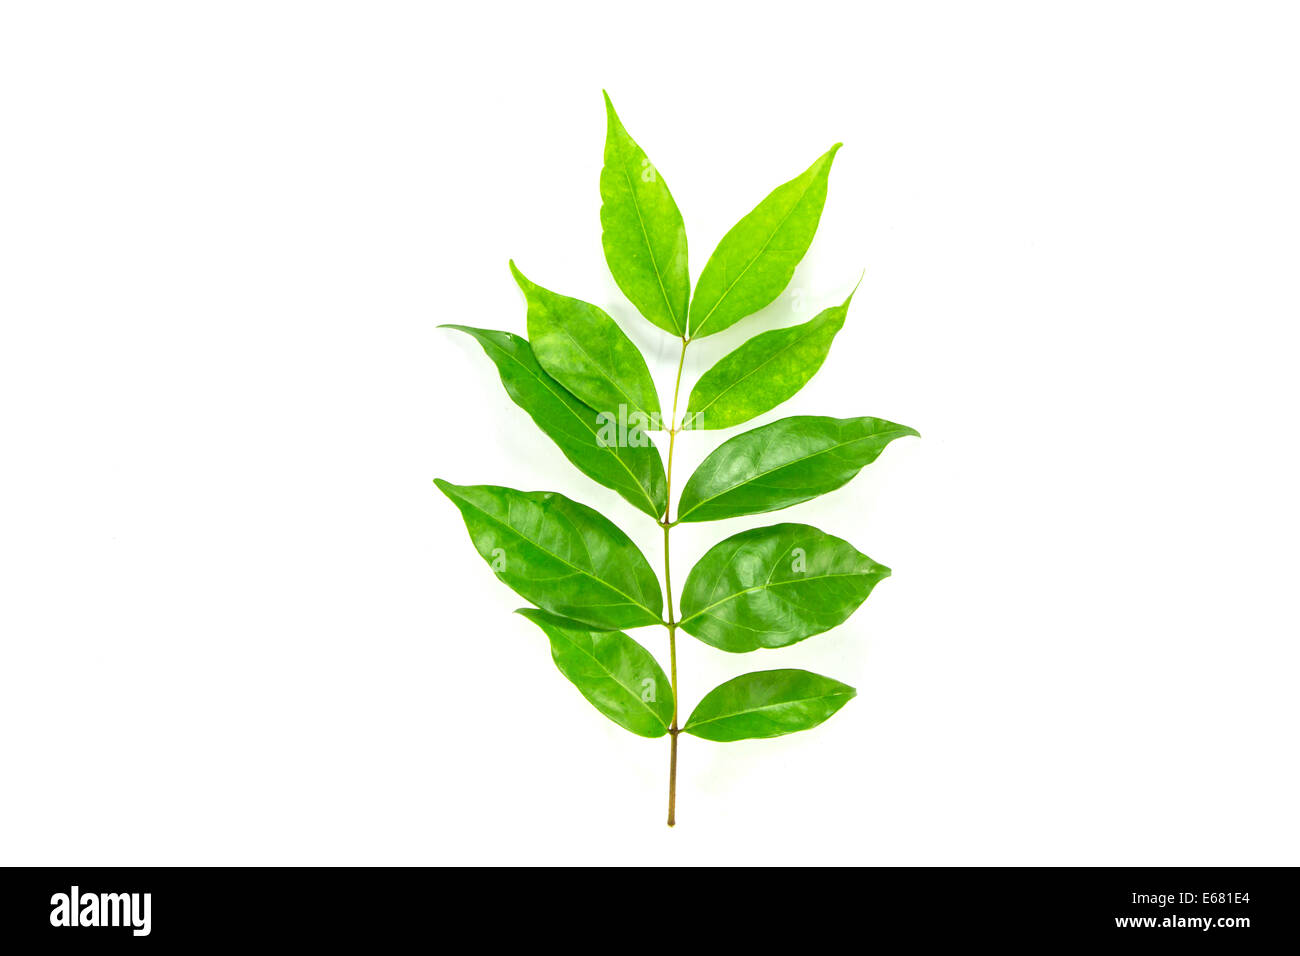 Green leaf on white background Stock Photo